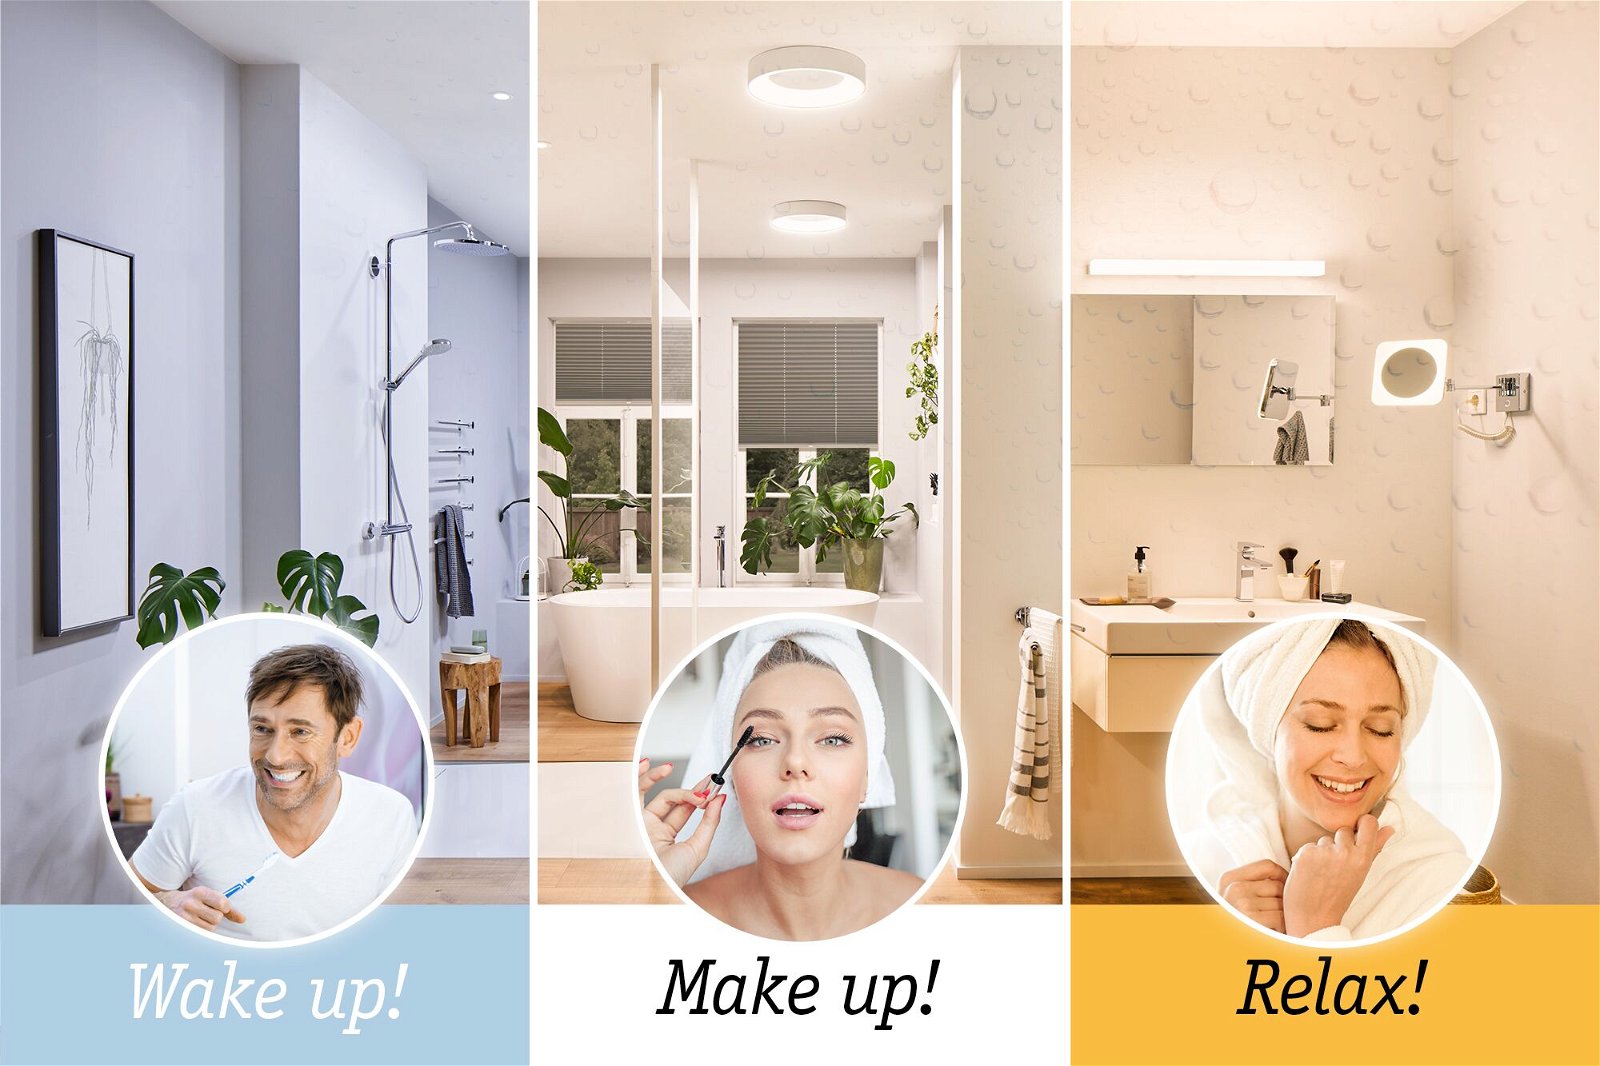 Miroir cosmétique LED Jora IP44 White Switch 60lm 230V 3,3W Chrome/Blanc/Miroir